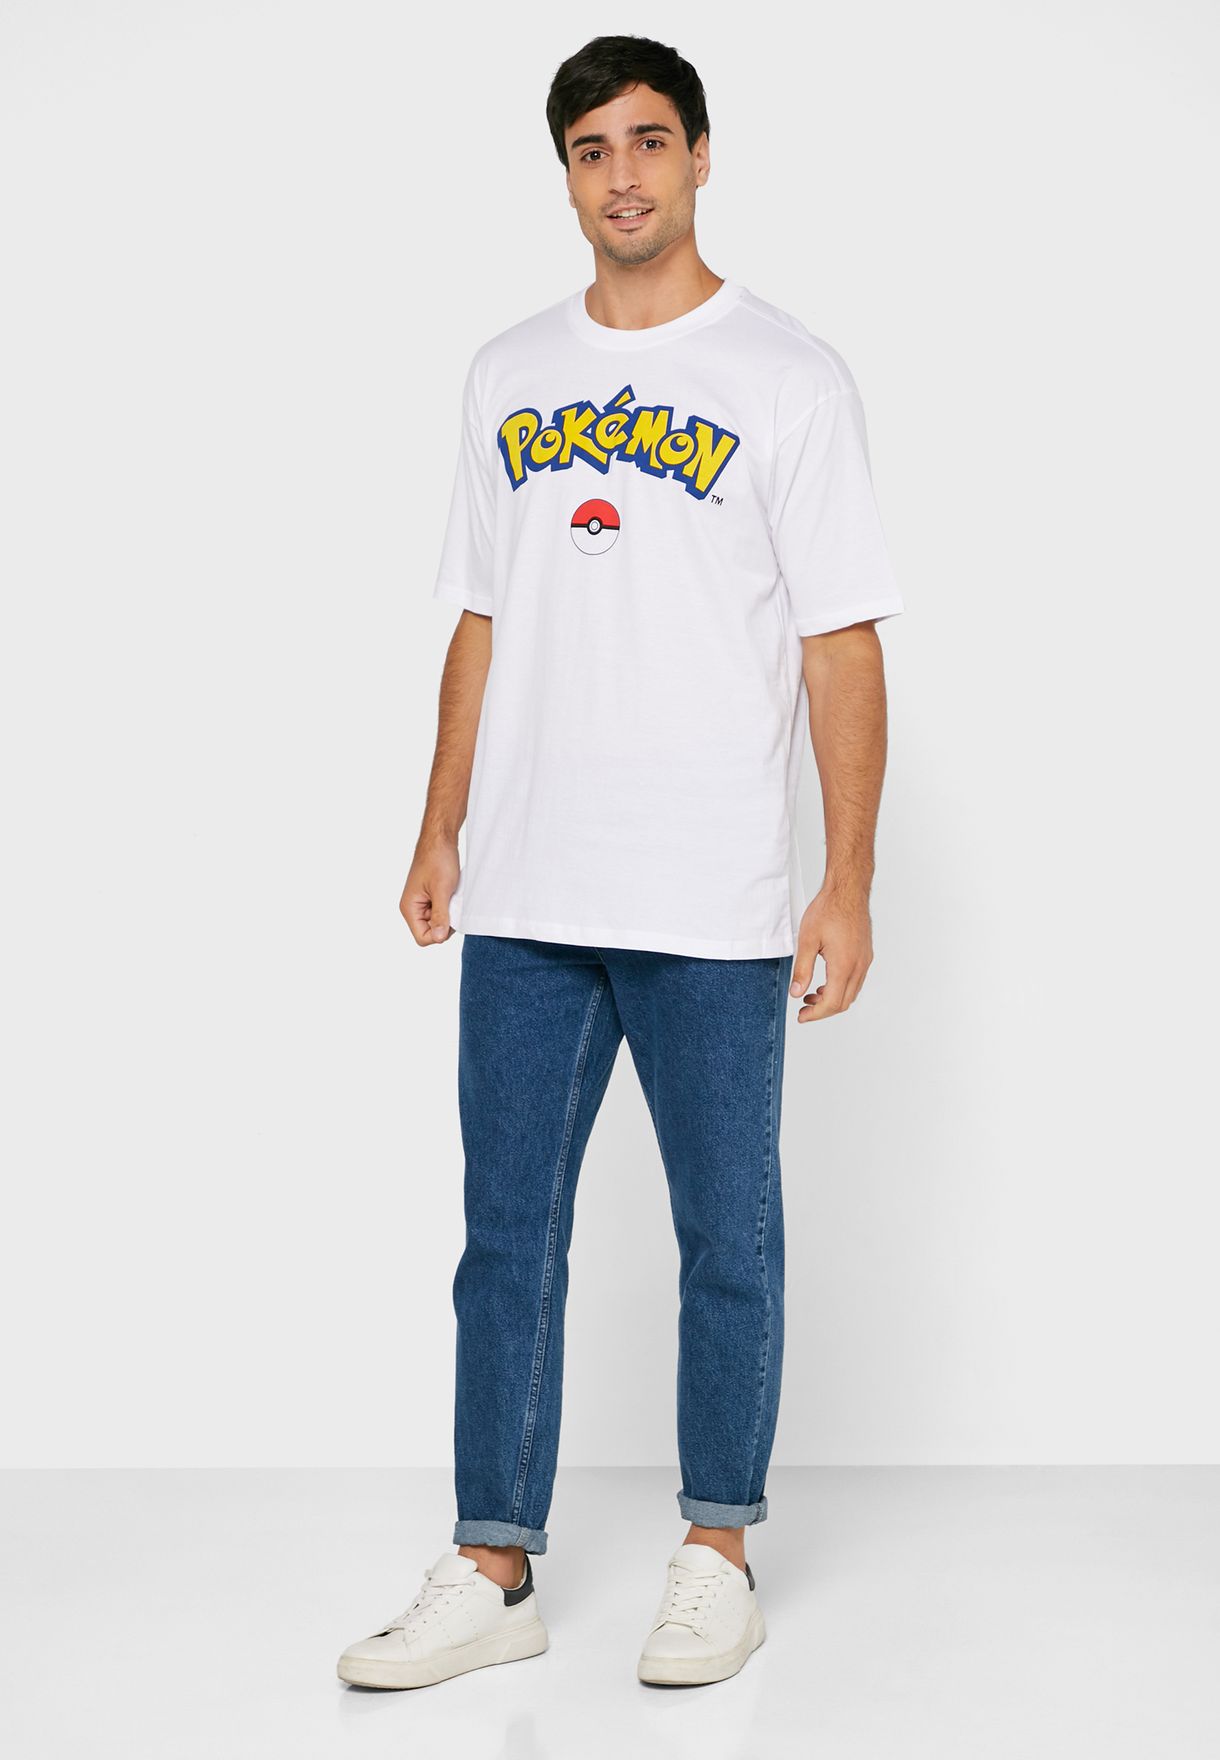 Pokémon Logo Crew Neck T-Shirt